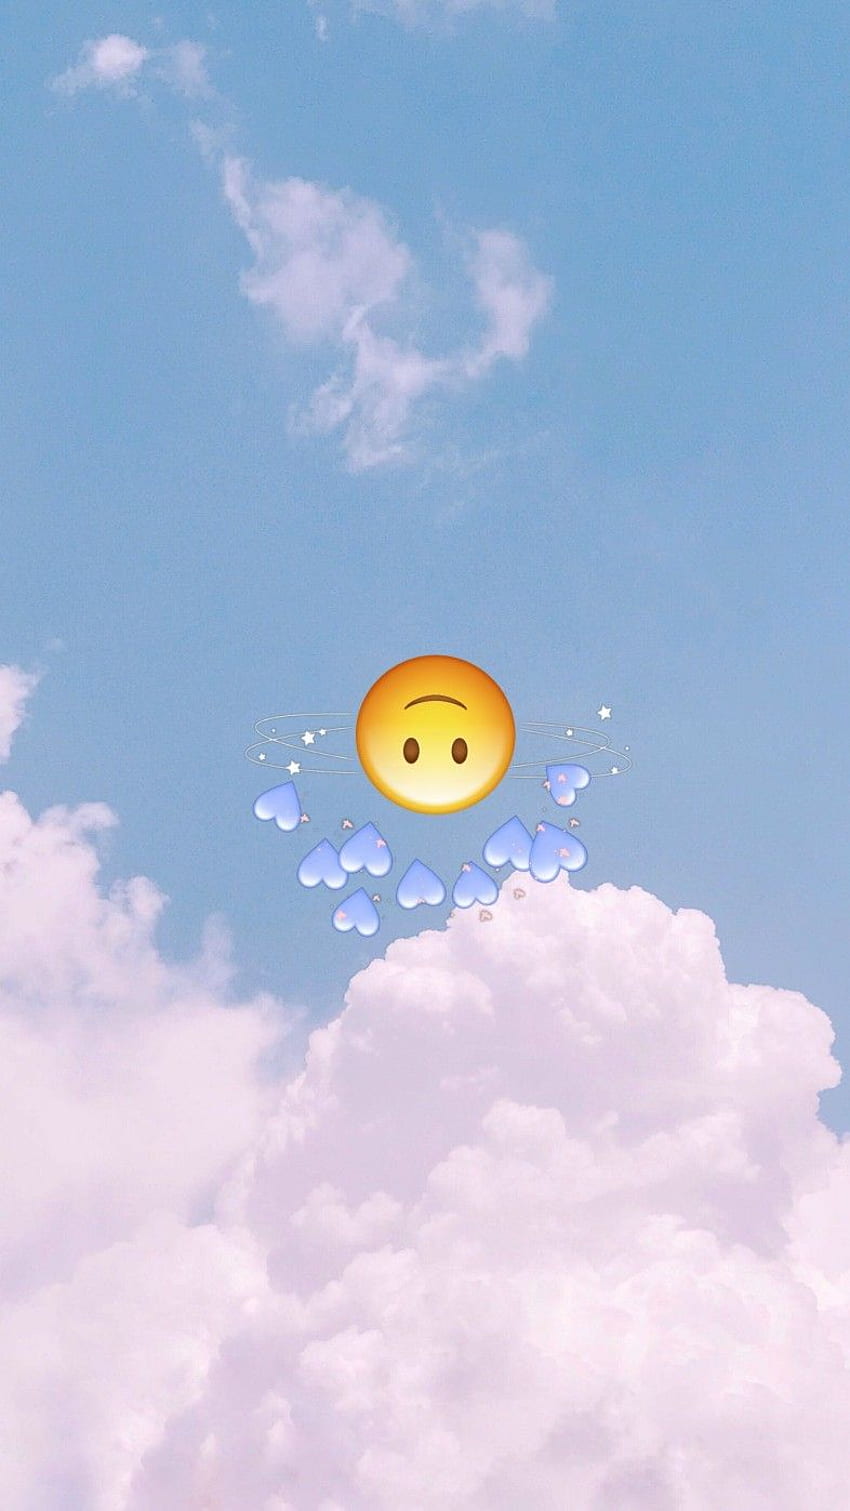 A cloud with an emoji face on it - Emoji